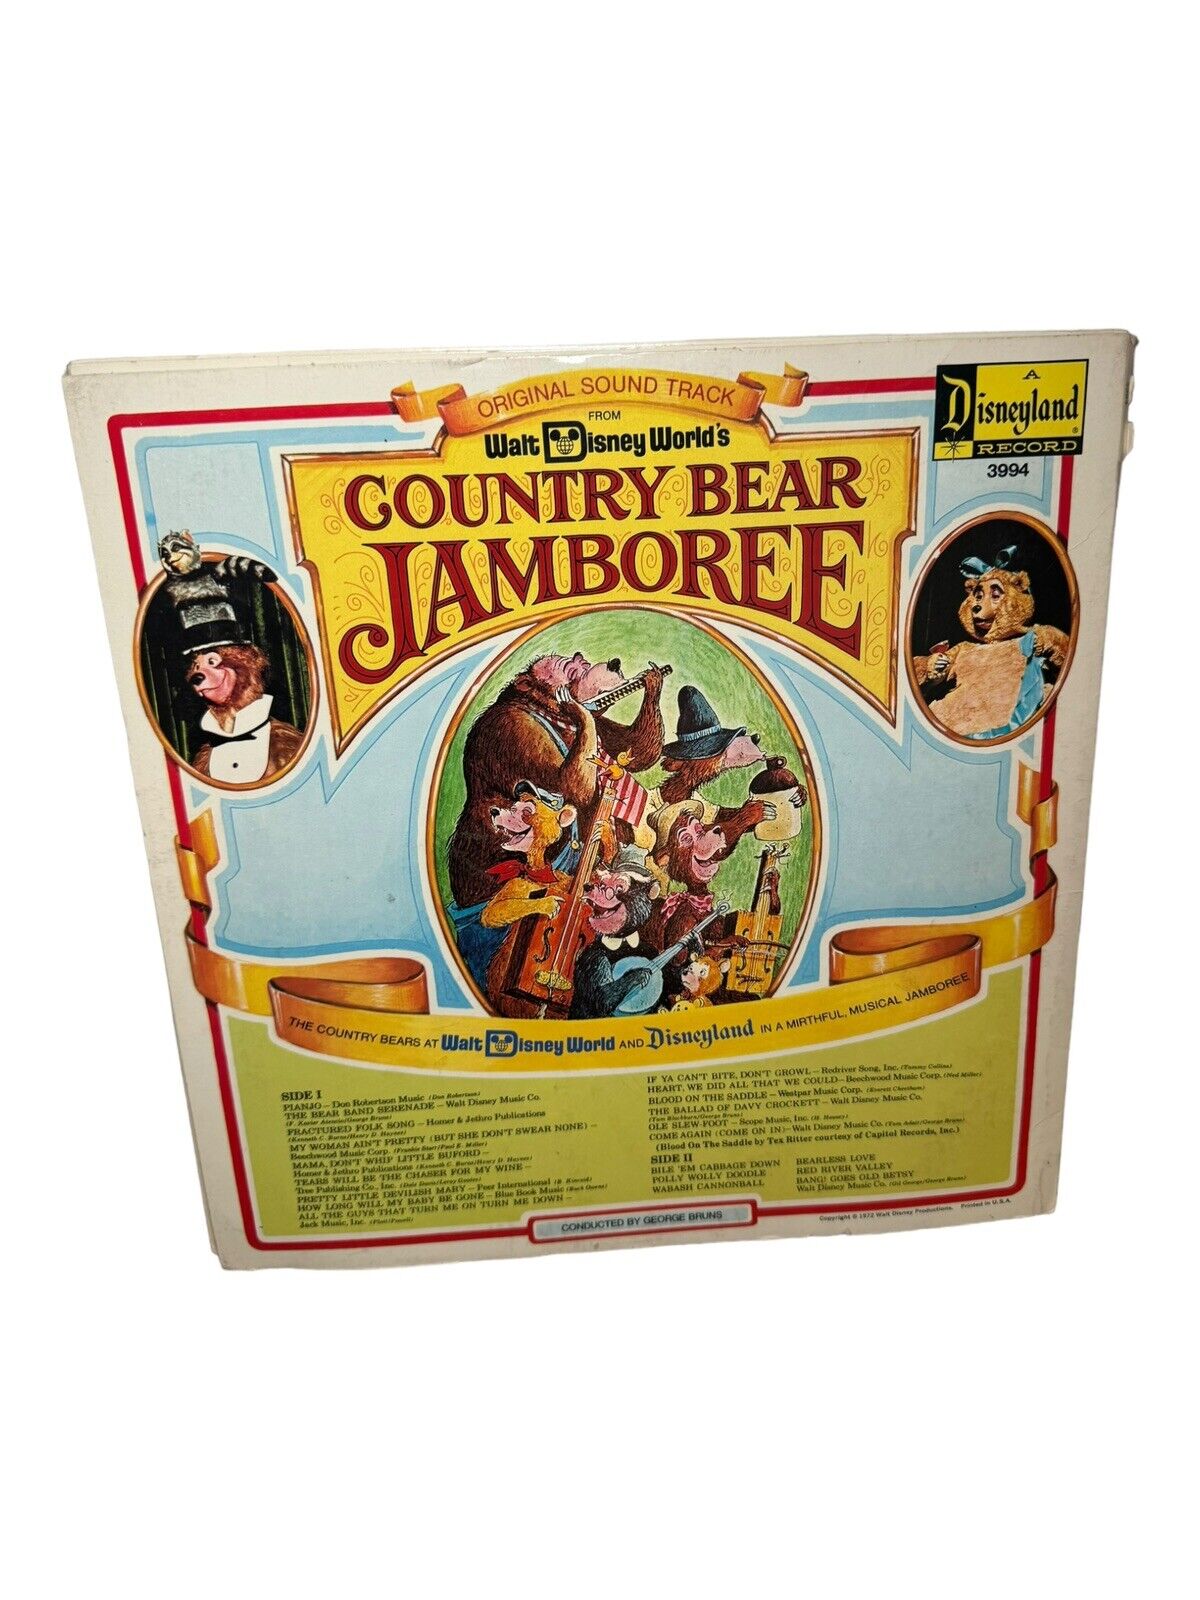 Country Bear Jamboree Vinyl LP Original Soundtrack 1972 Disneyland Record 3994